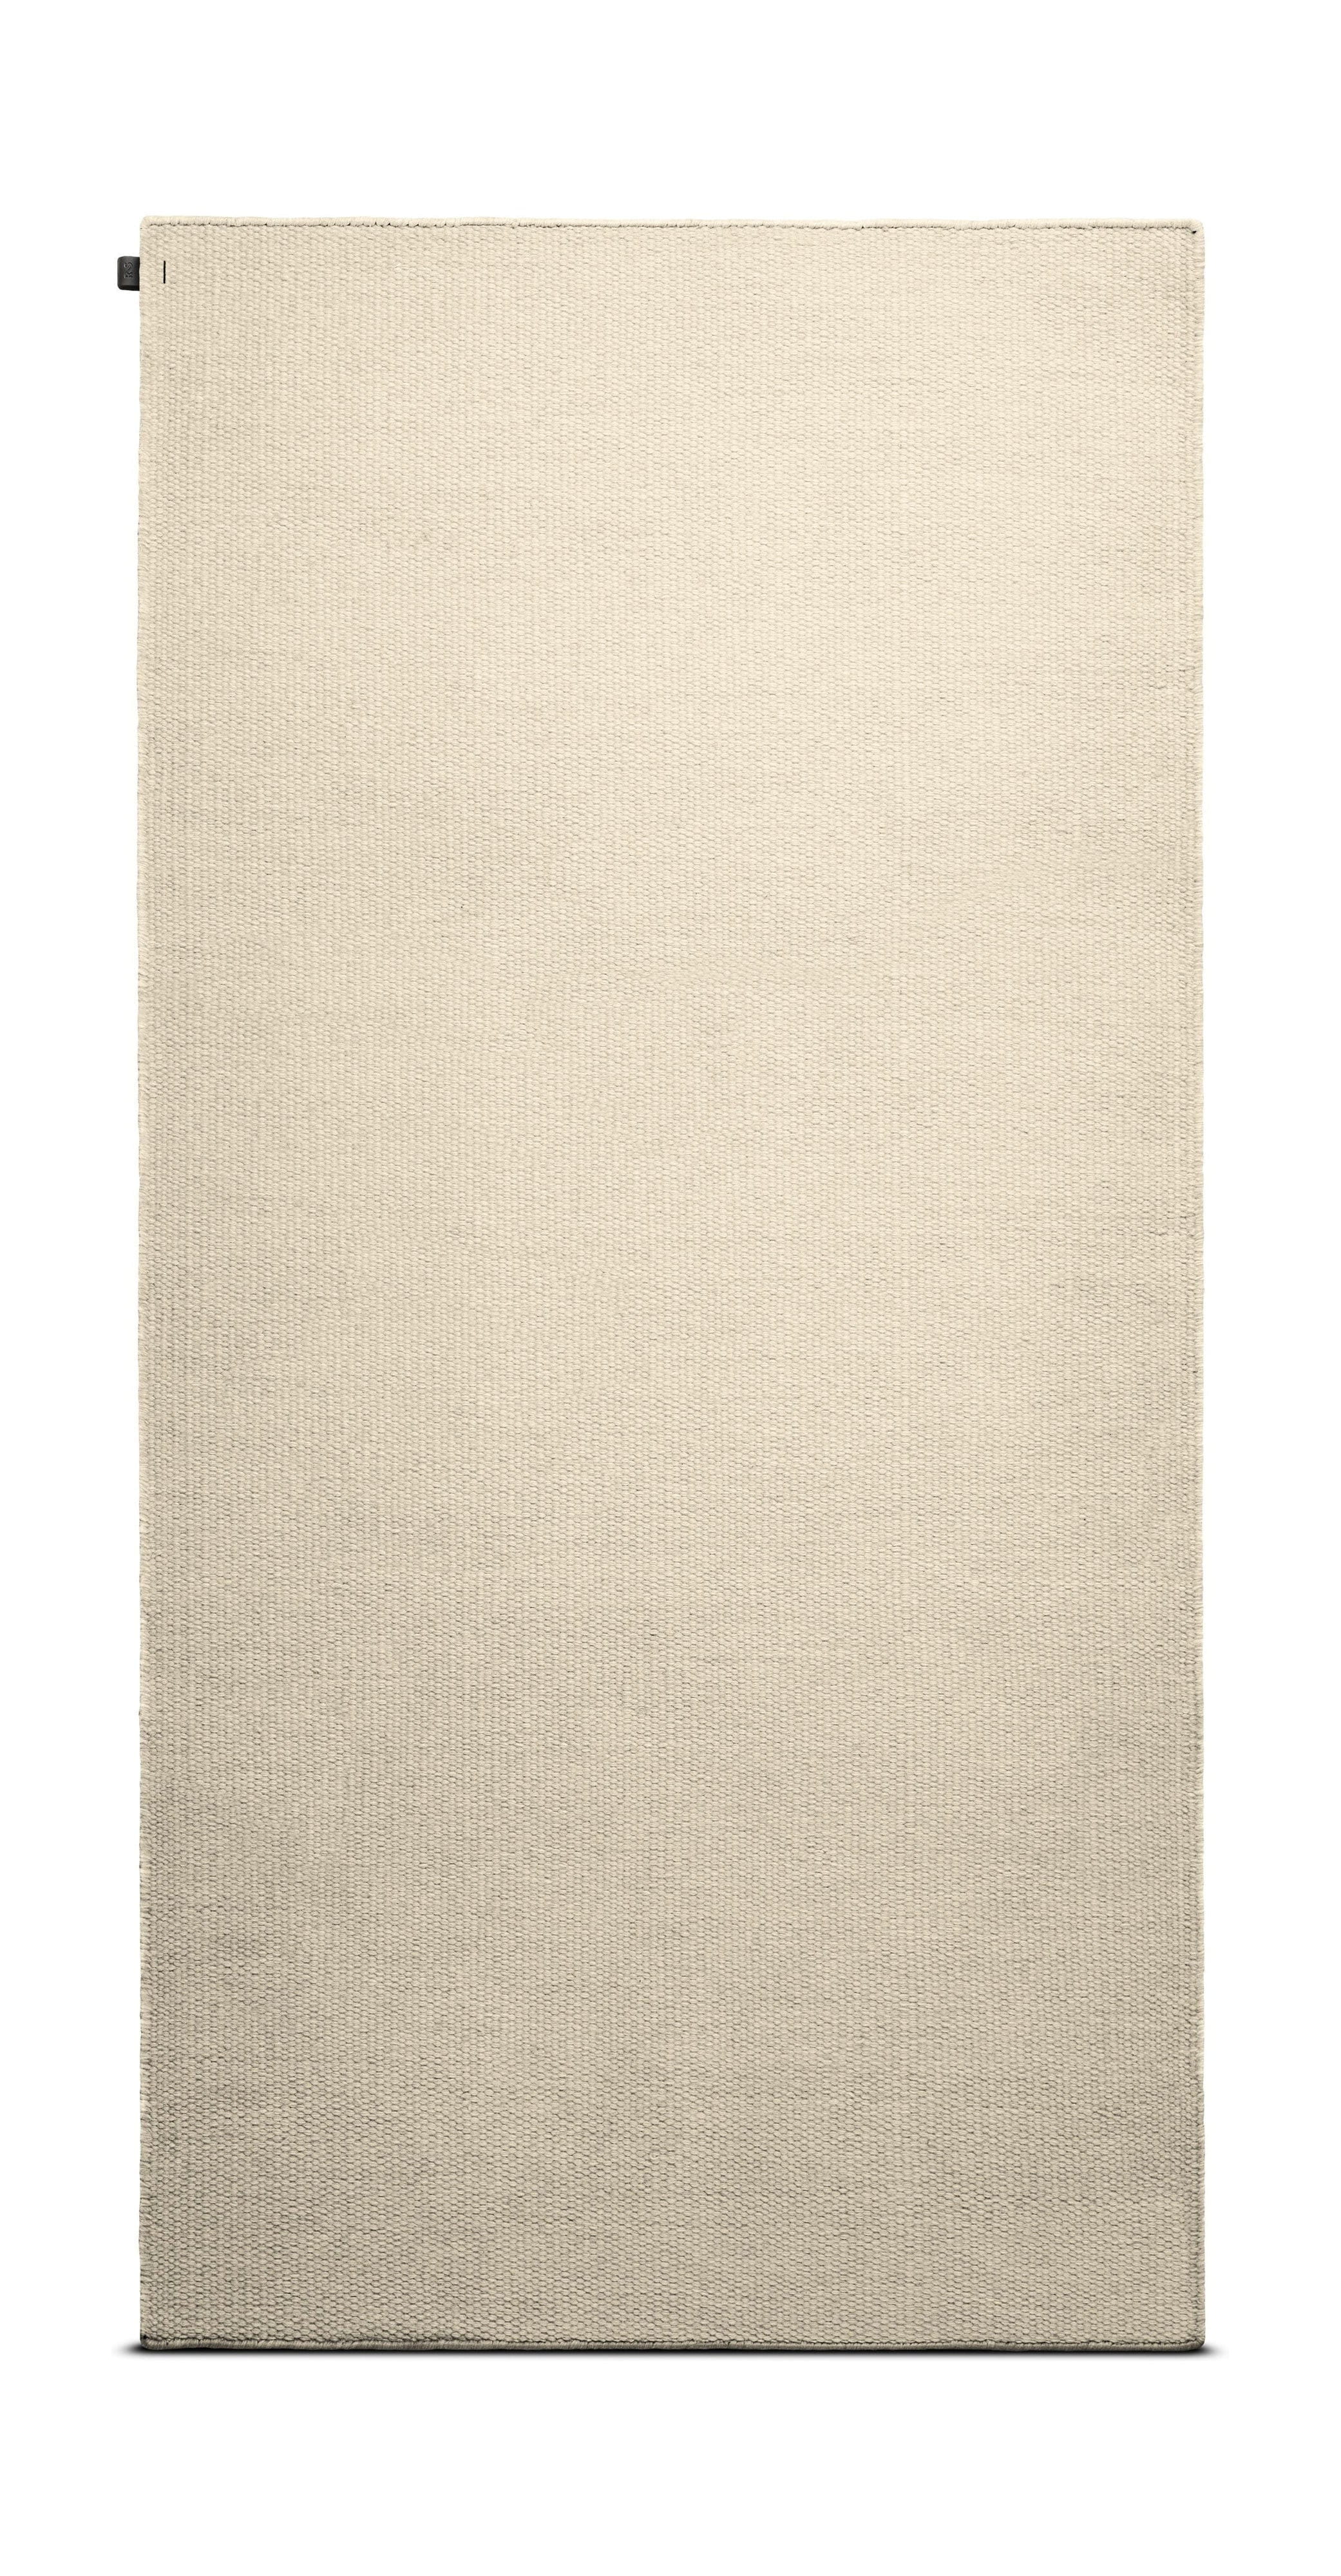 Rug Solid Huisdier tapijt 170 x 240 cm, latte